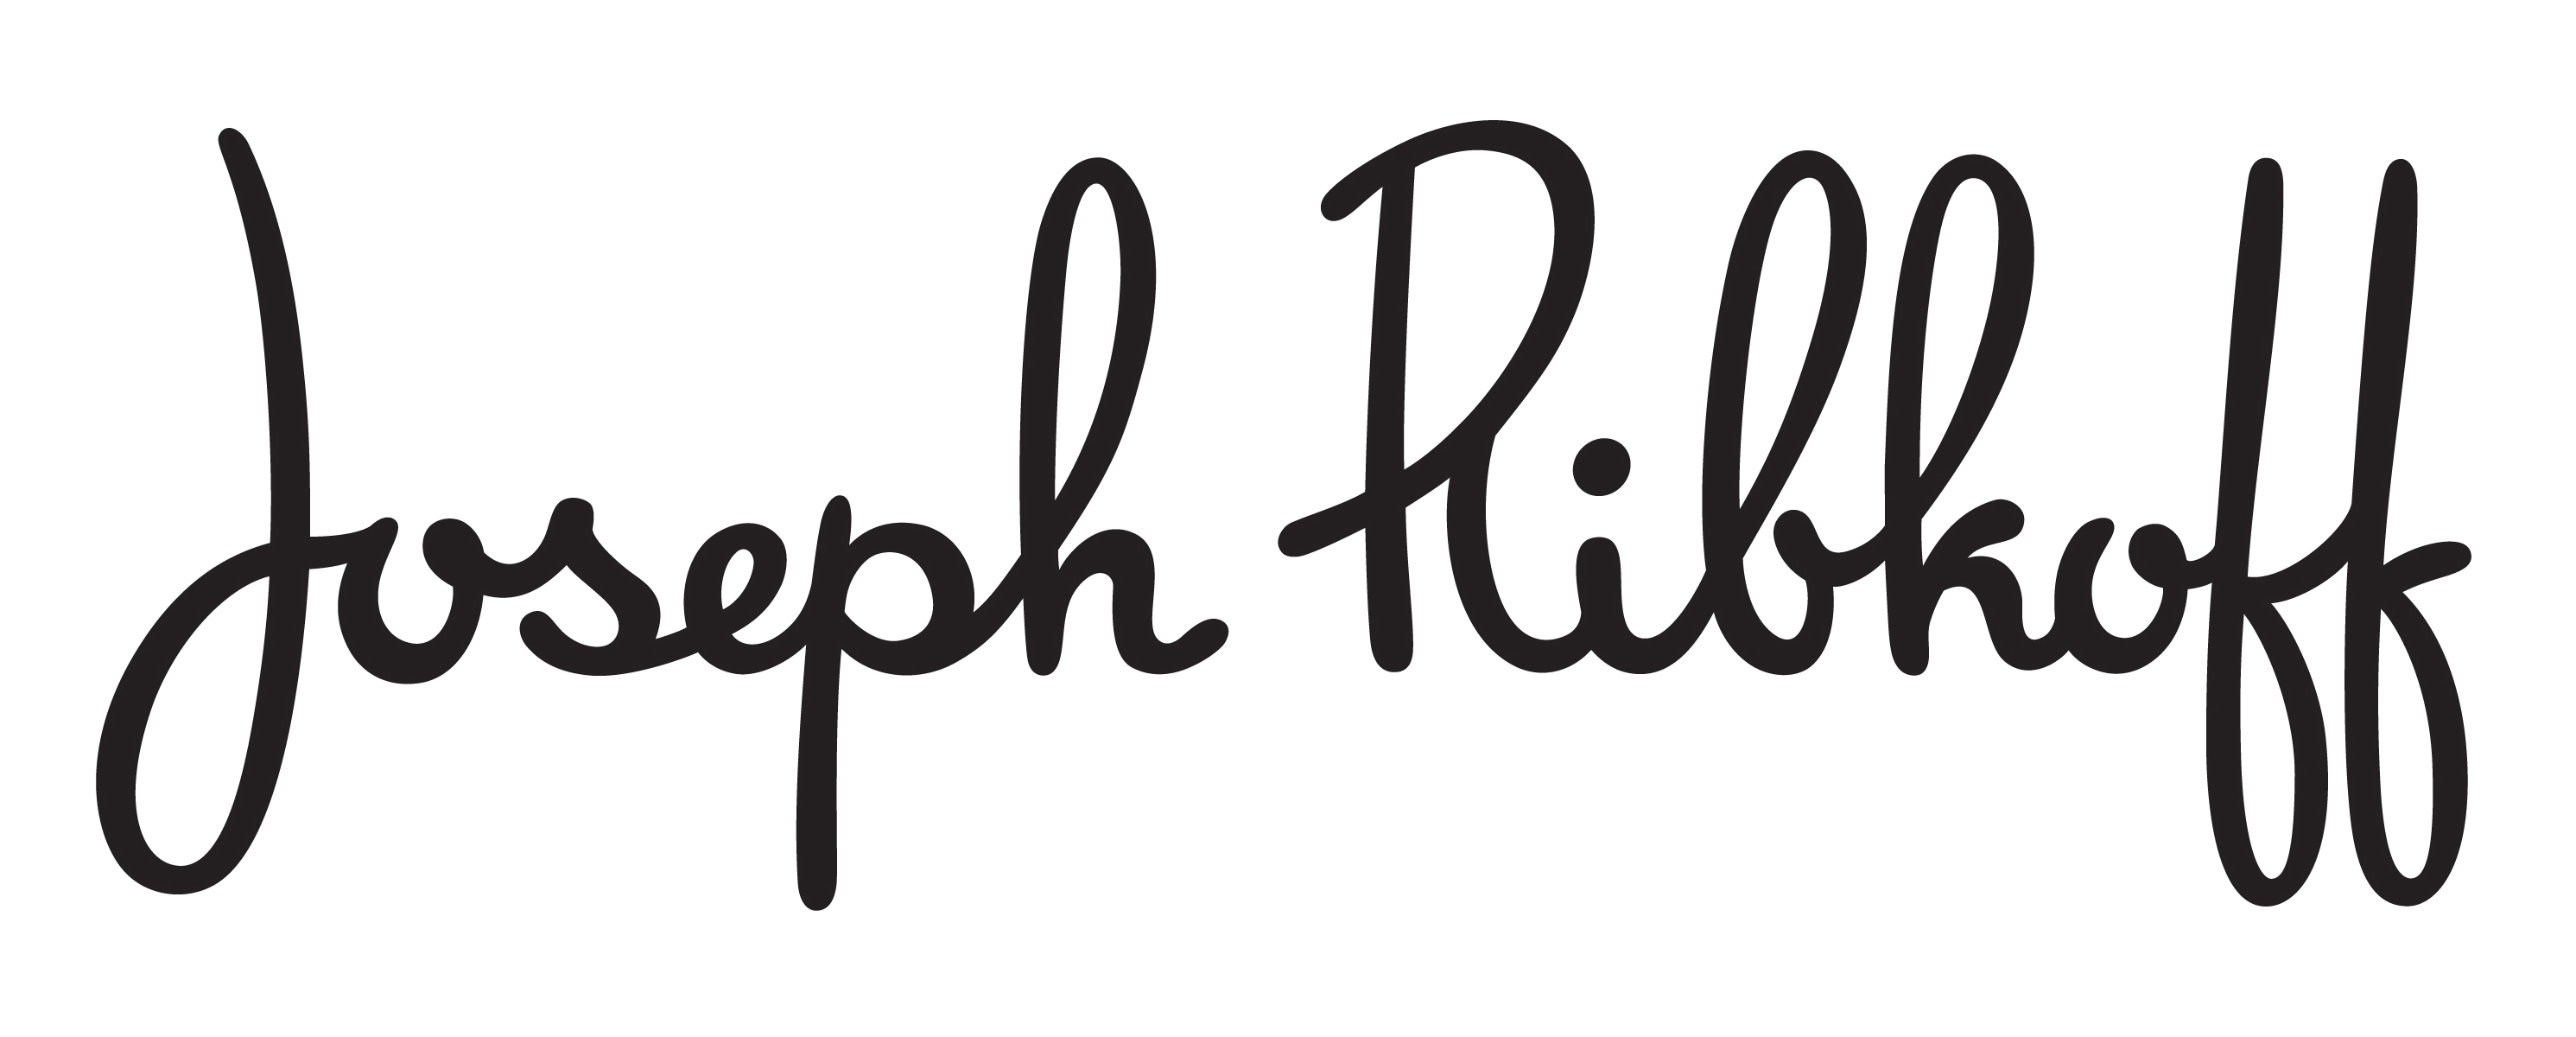 joseph-ribkoff-logo.jpg